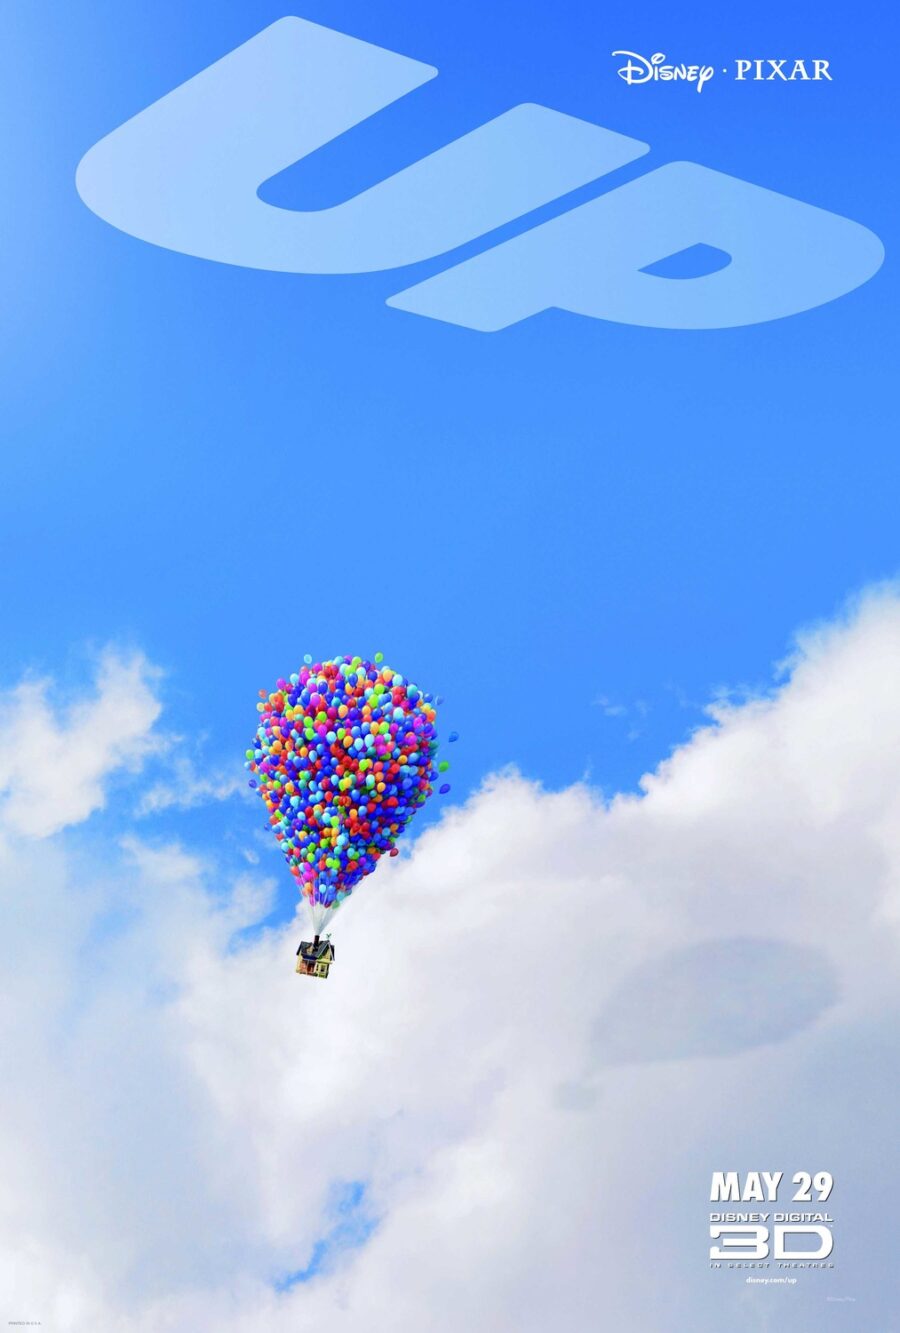 Pixar's Up